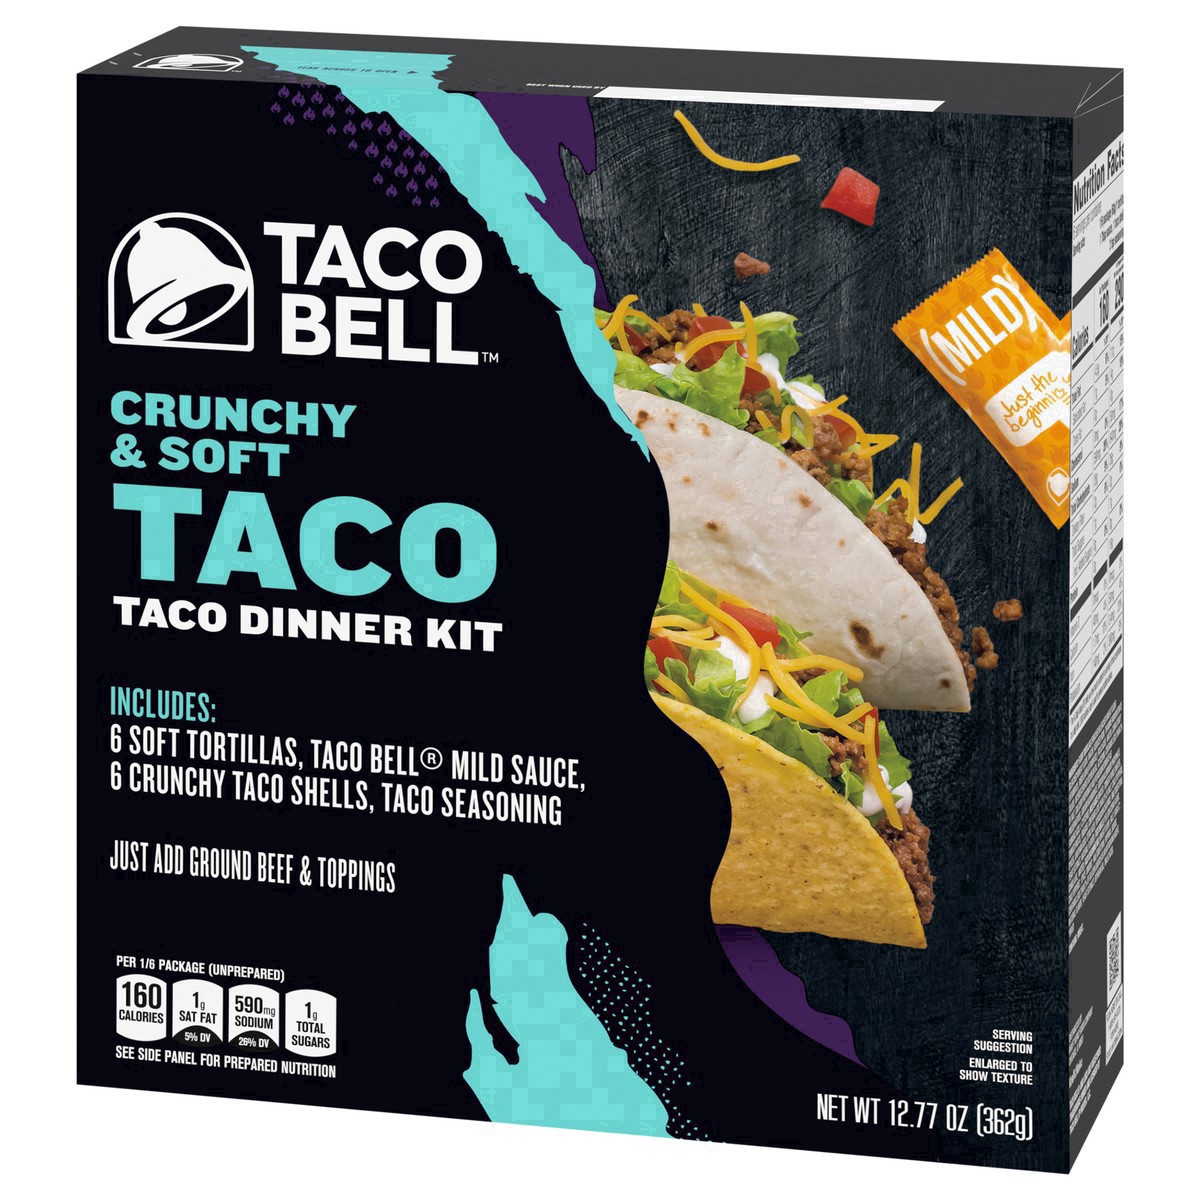 slide 73 of 101, Taco Bell Crunchy & Soft Taco Cravings Kit with 6 Soft Tortillas, 6 Crunchy Taco Shells, Taco Bell Mild Sauce & Seasoning, 12.77 oz Box, 1 ea